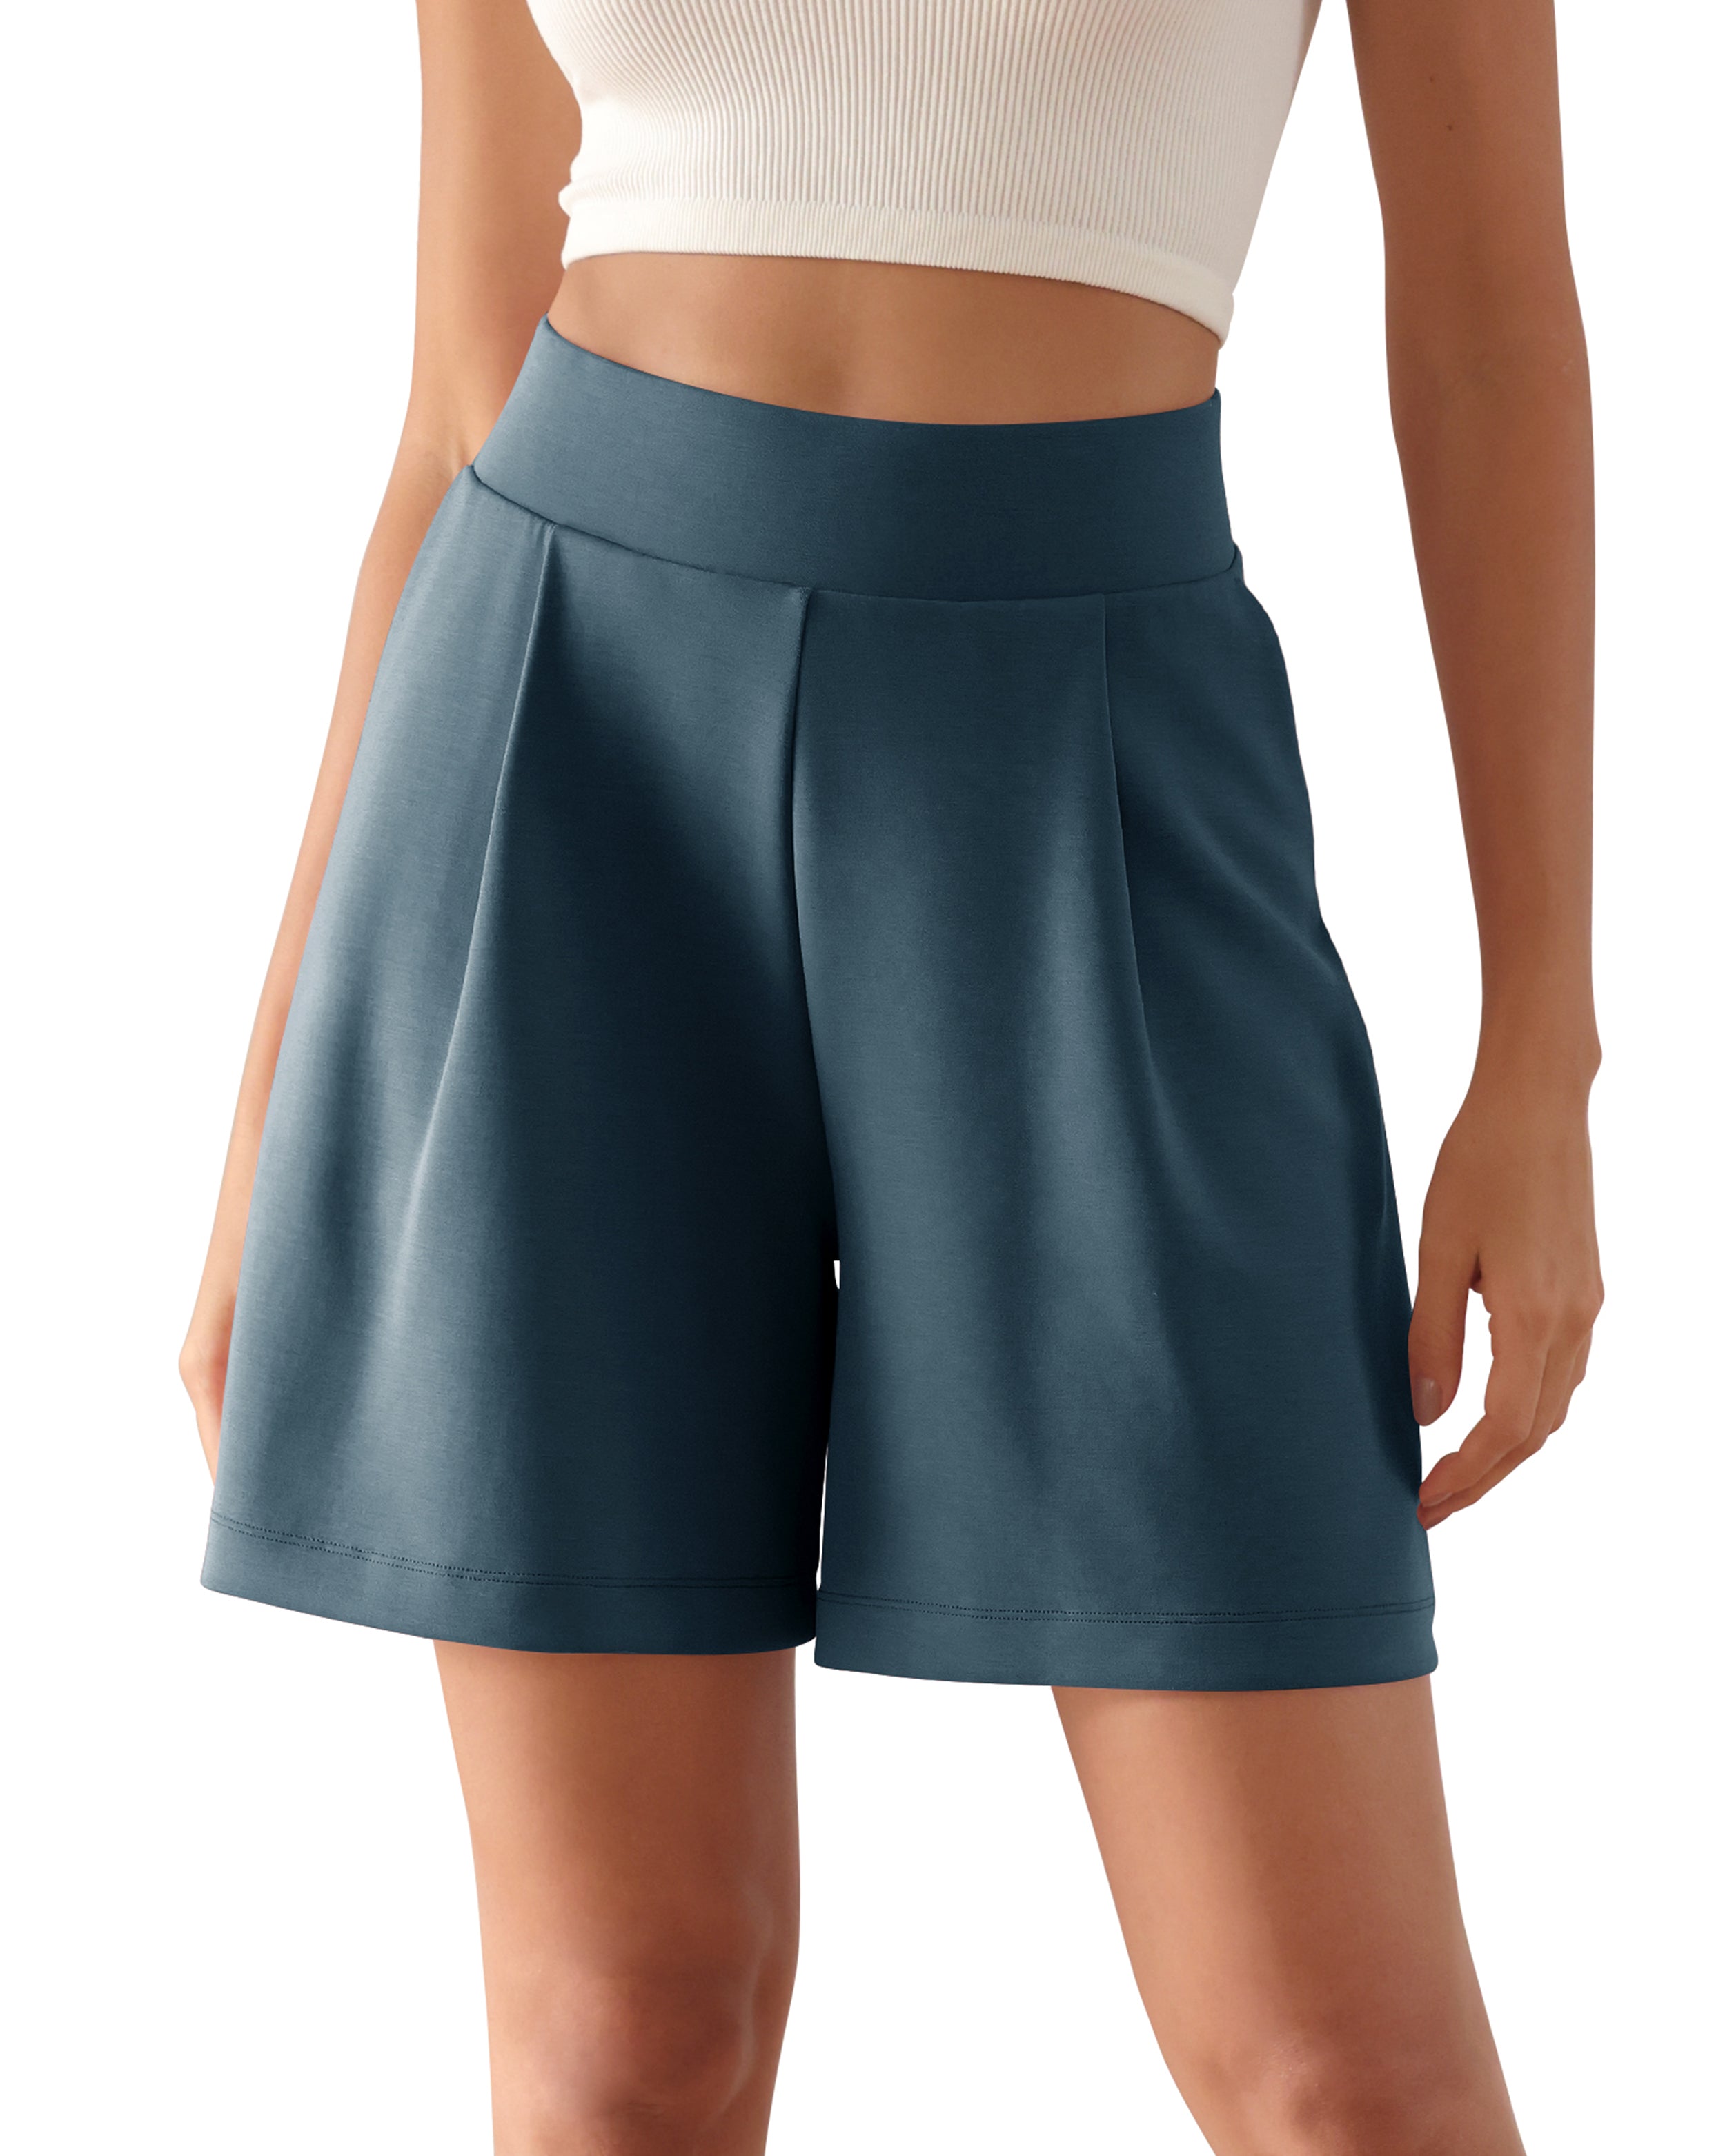 Modal Soft High Waist Wide Leg Shorts with Pockets Deep Blue 6 inch - ododos